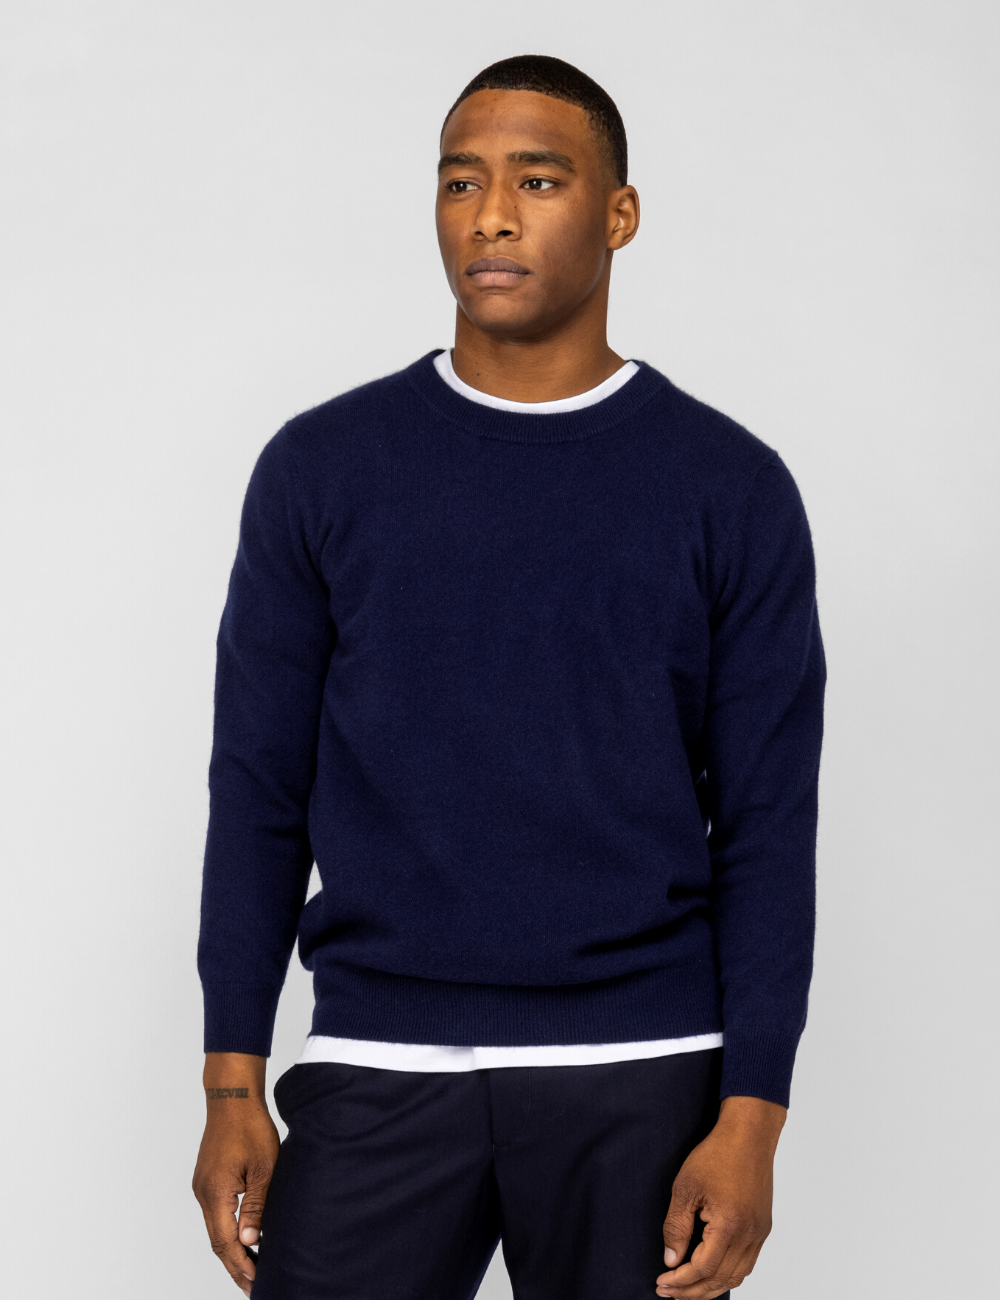 Cashmere sweater | Shop now | Blazoer